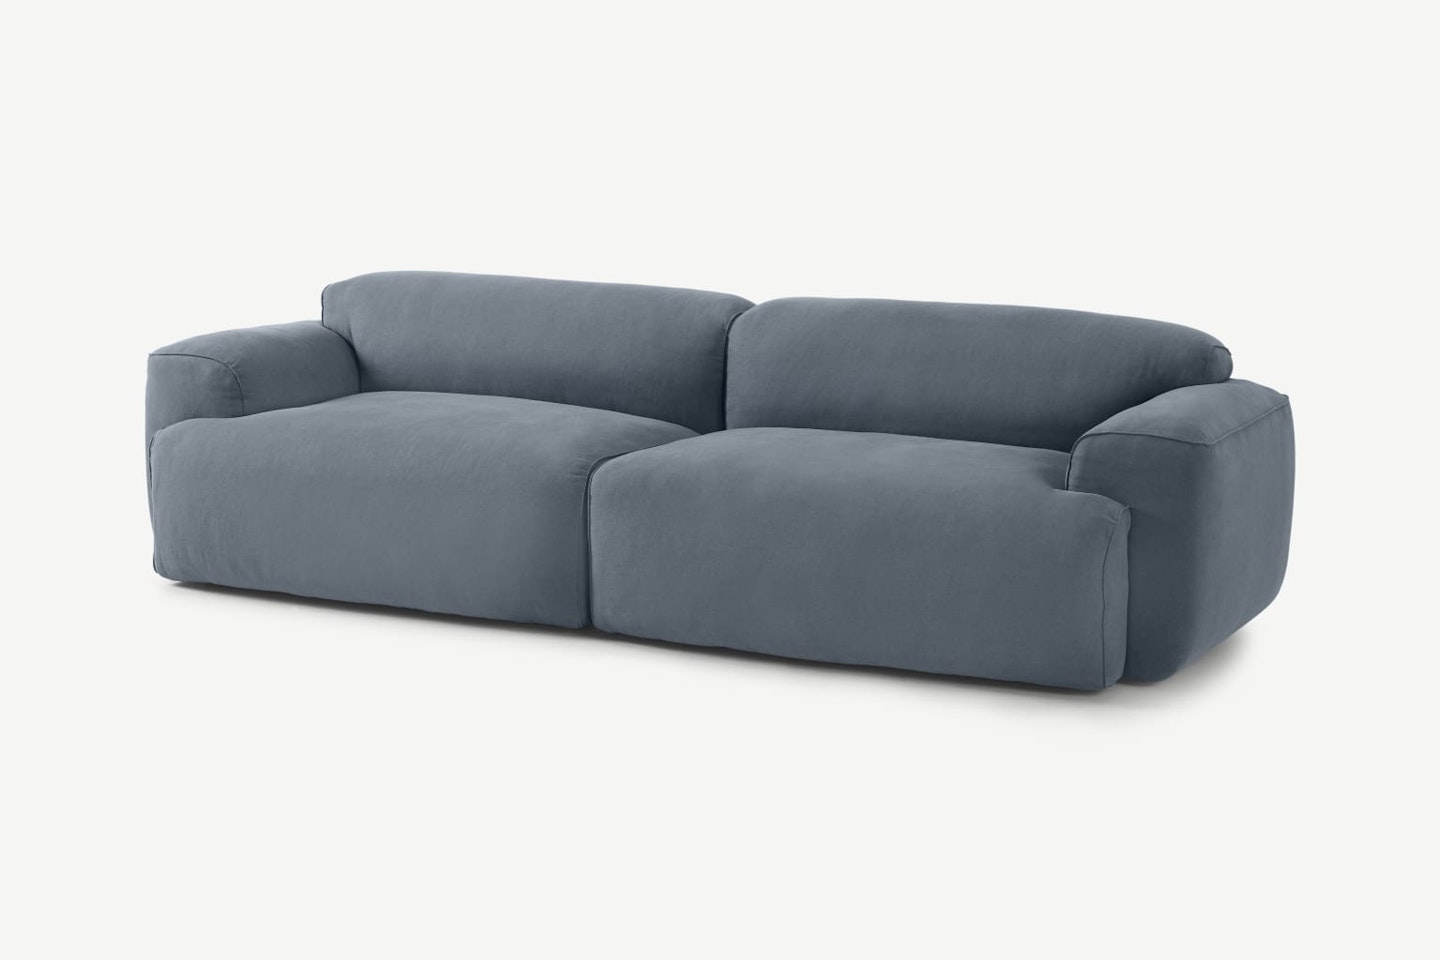 MADE, Avalon 3 Seater Sofa, Jeans Blue Cotton & Linen Mix, £1,450